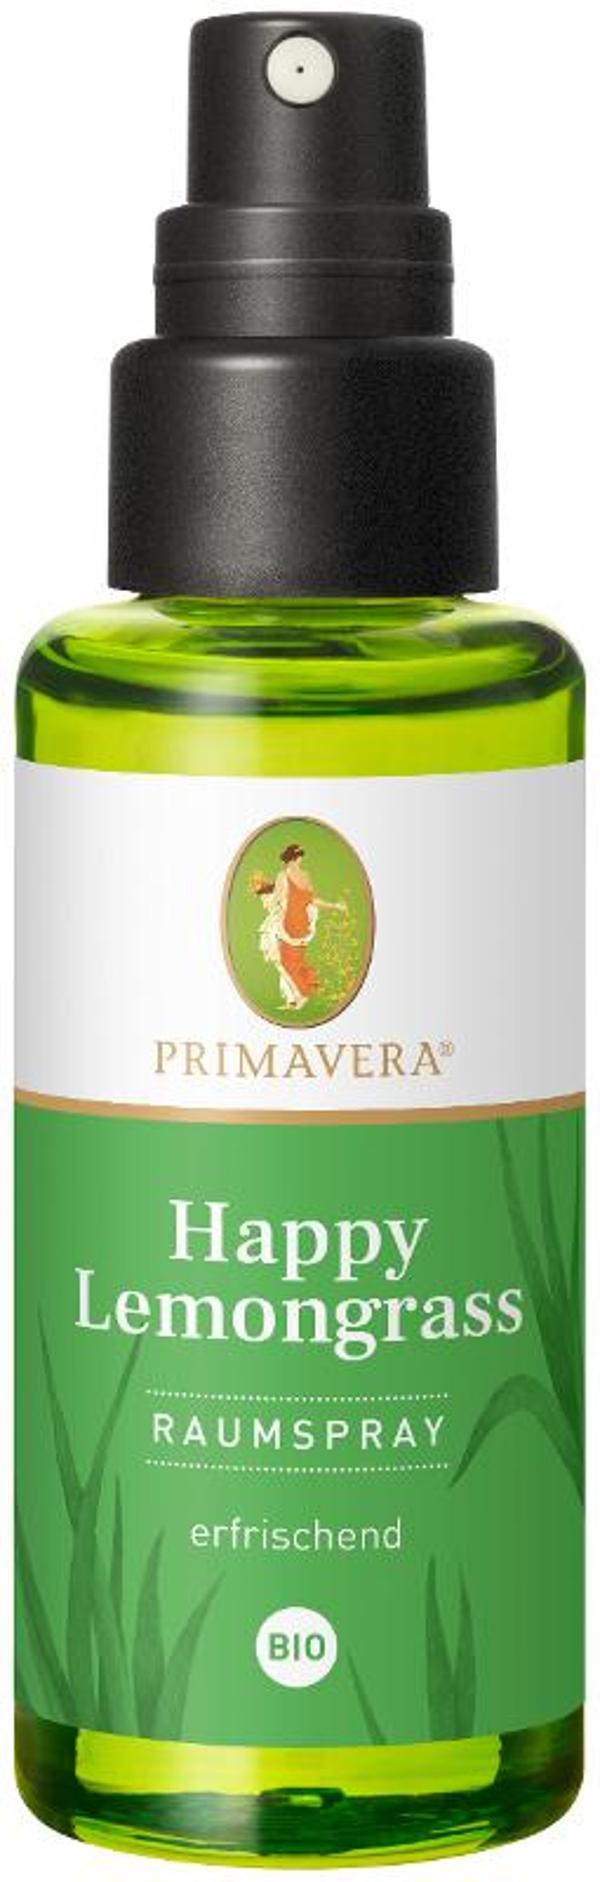 Produktfoto zu Raumspray Happy Lemongrass 50ml Primavera